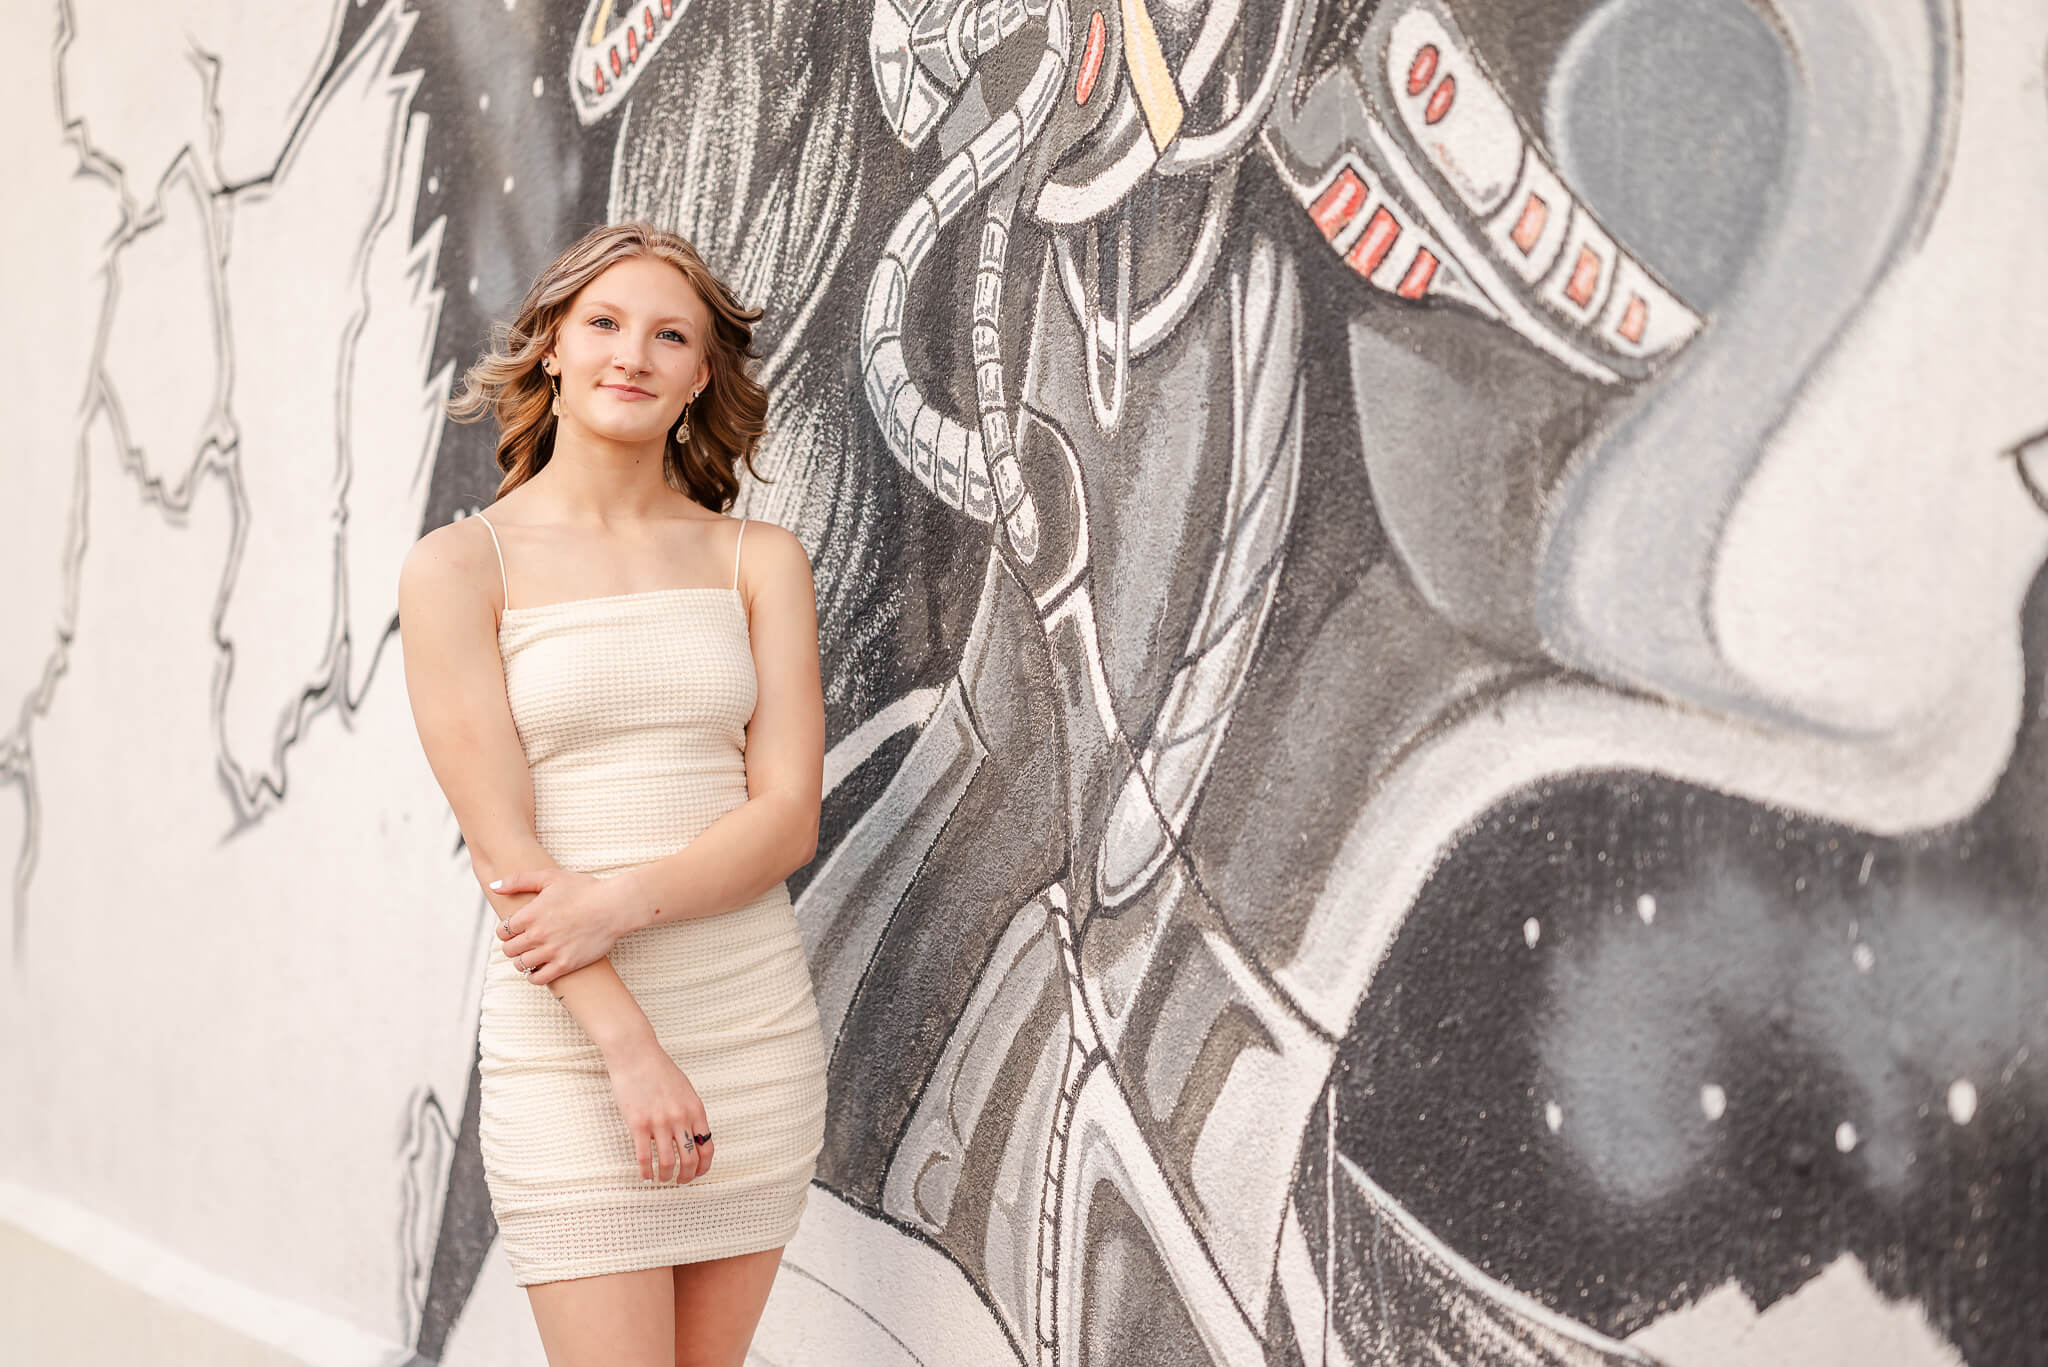 A high school senior in a white dress stands near a black and white mural. She sees a tutor in Virginia Beach.